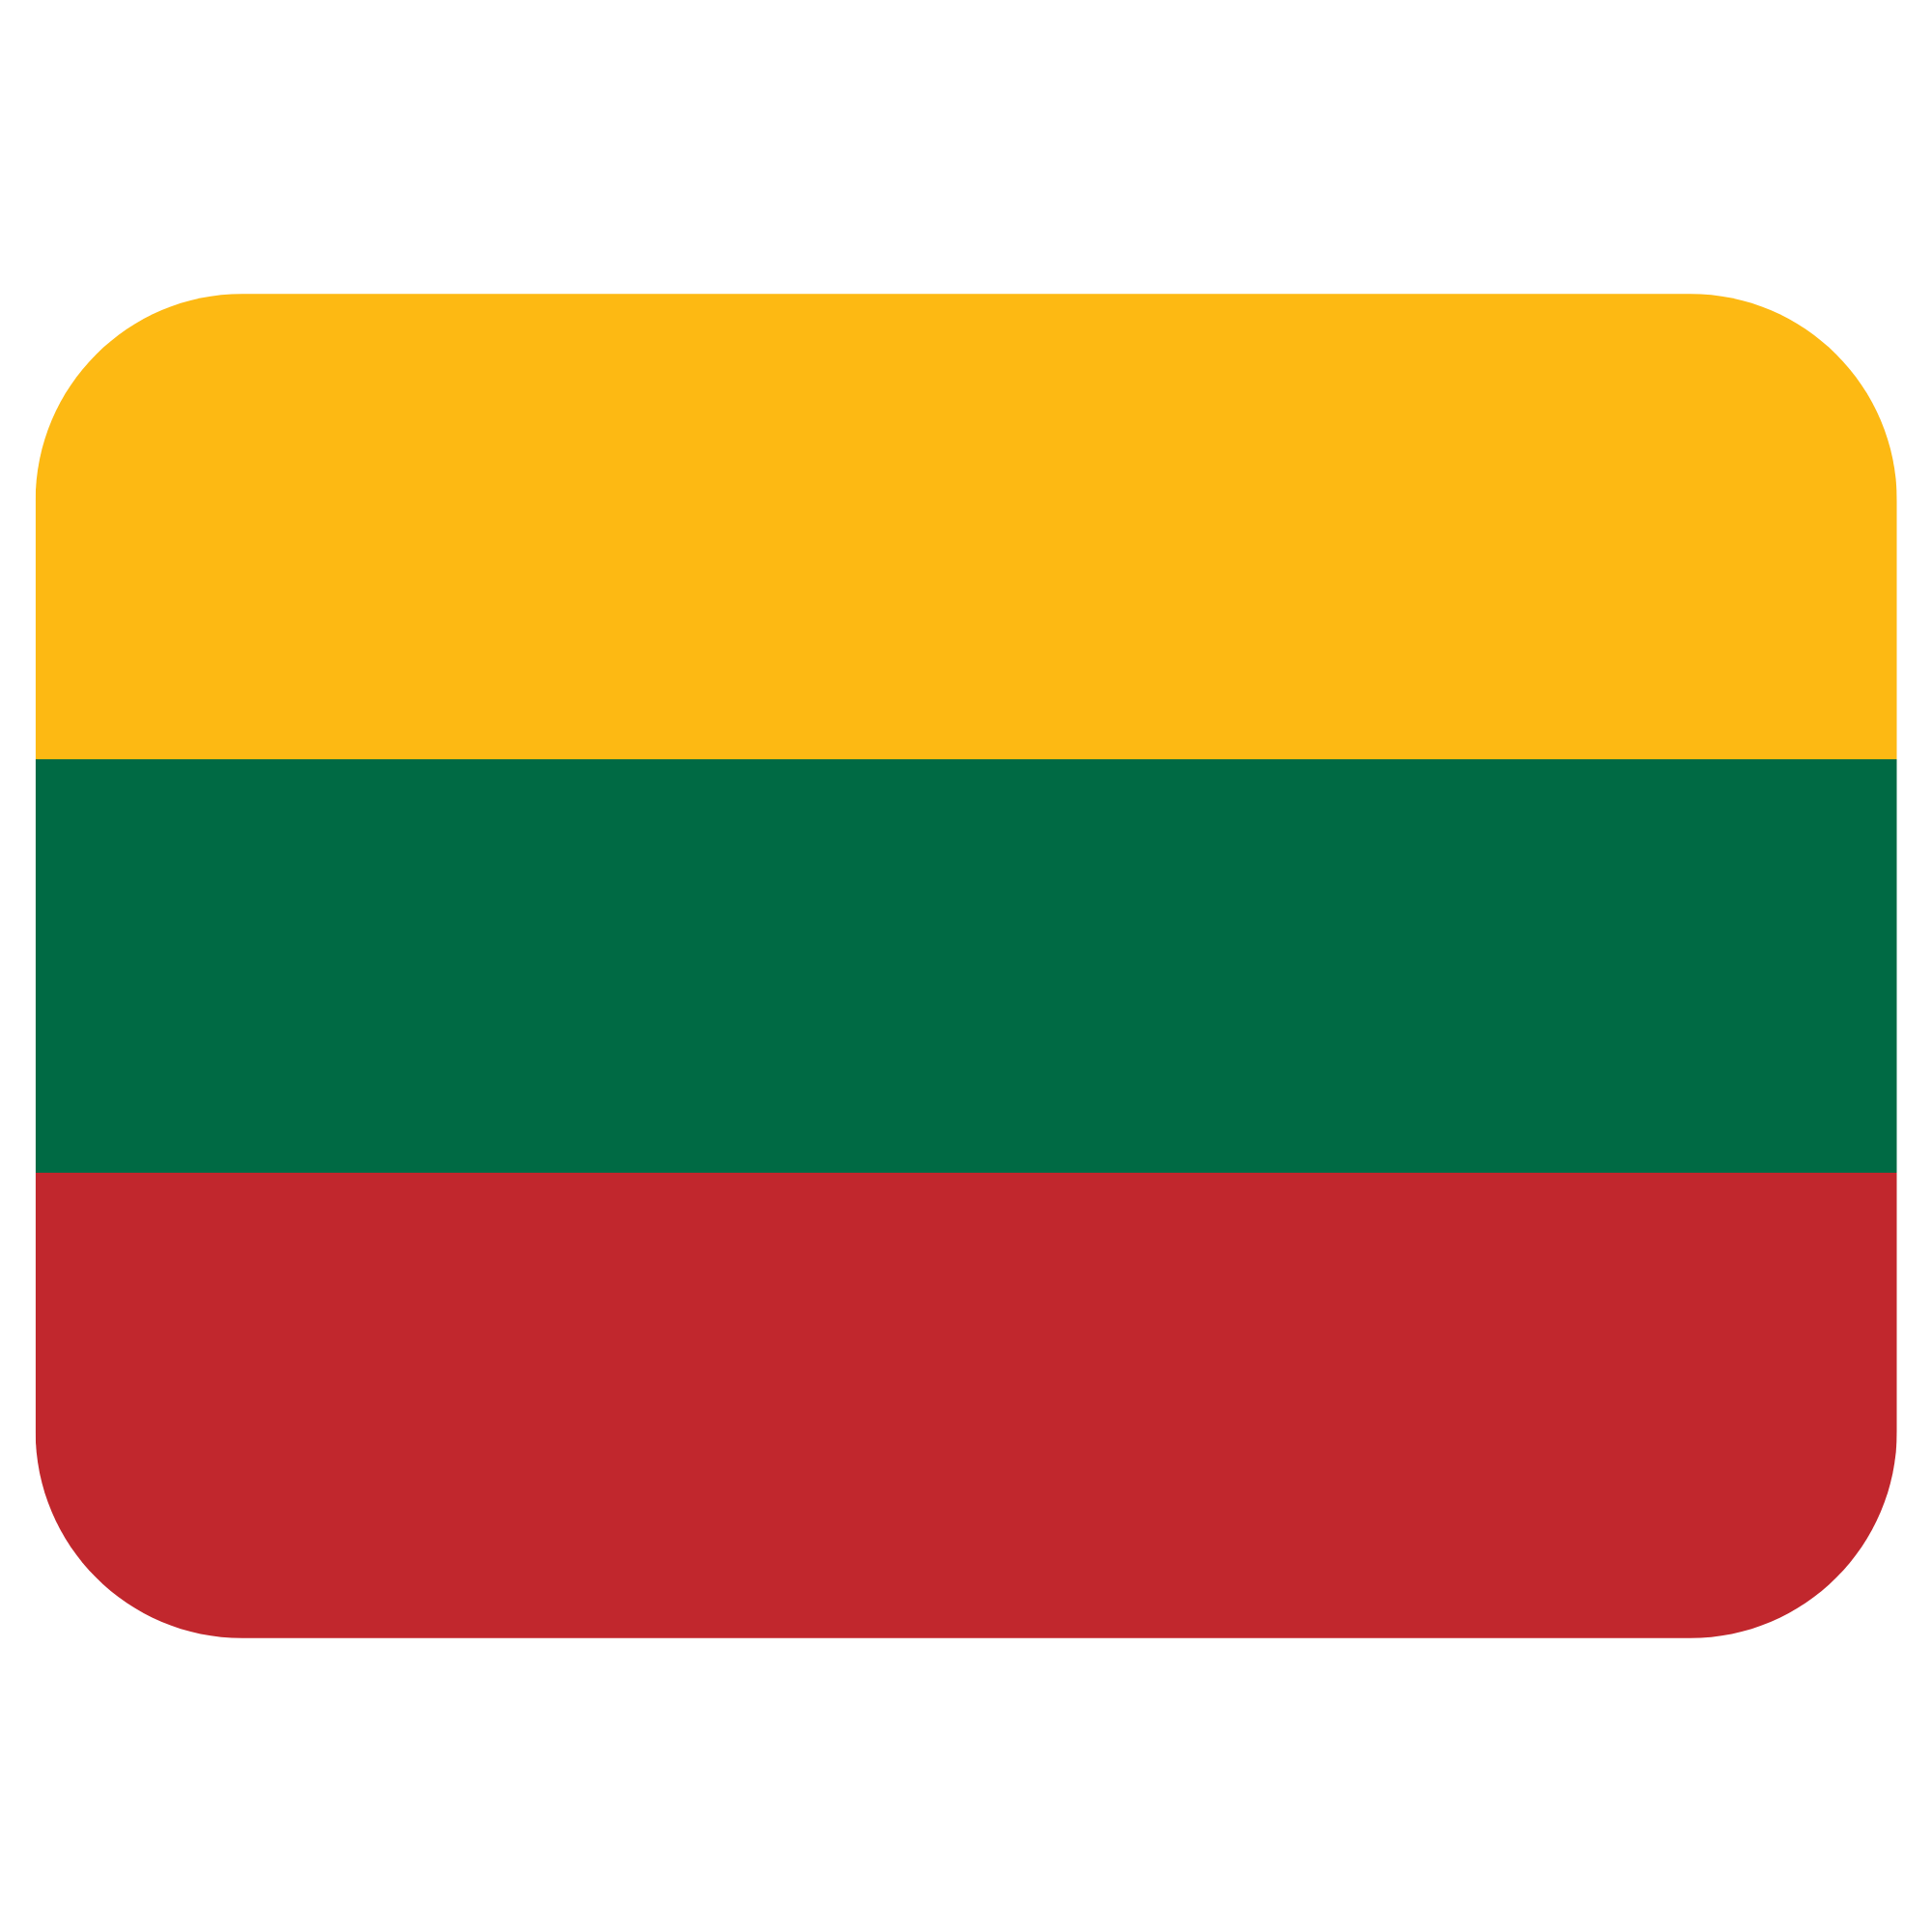 Lithuania M20